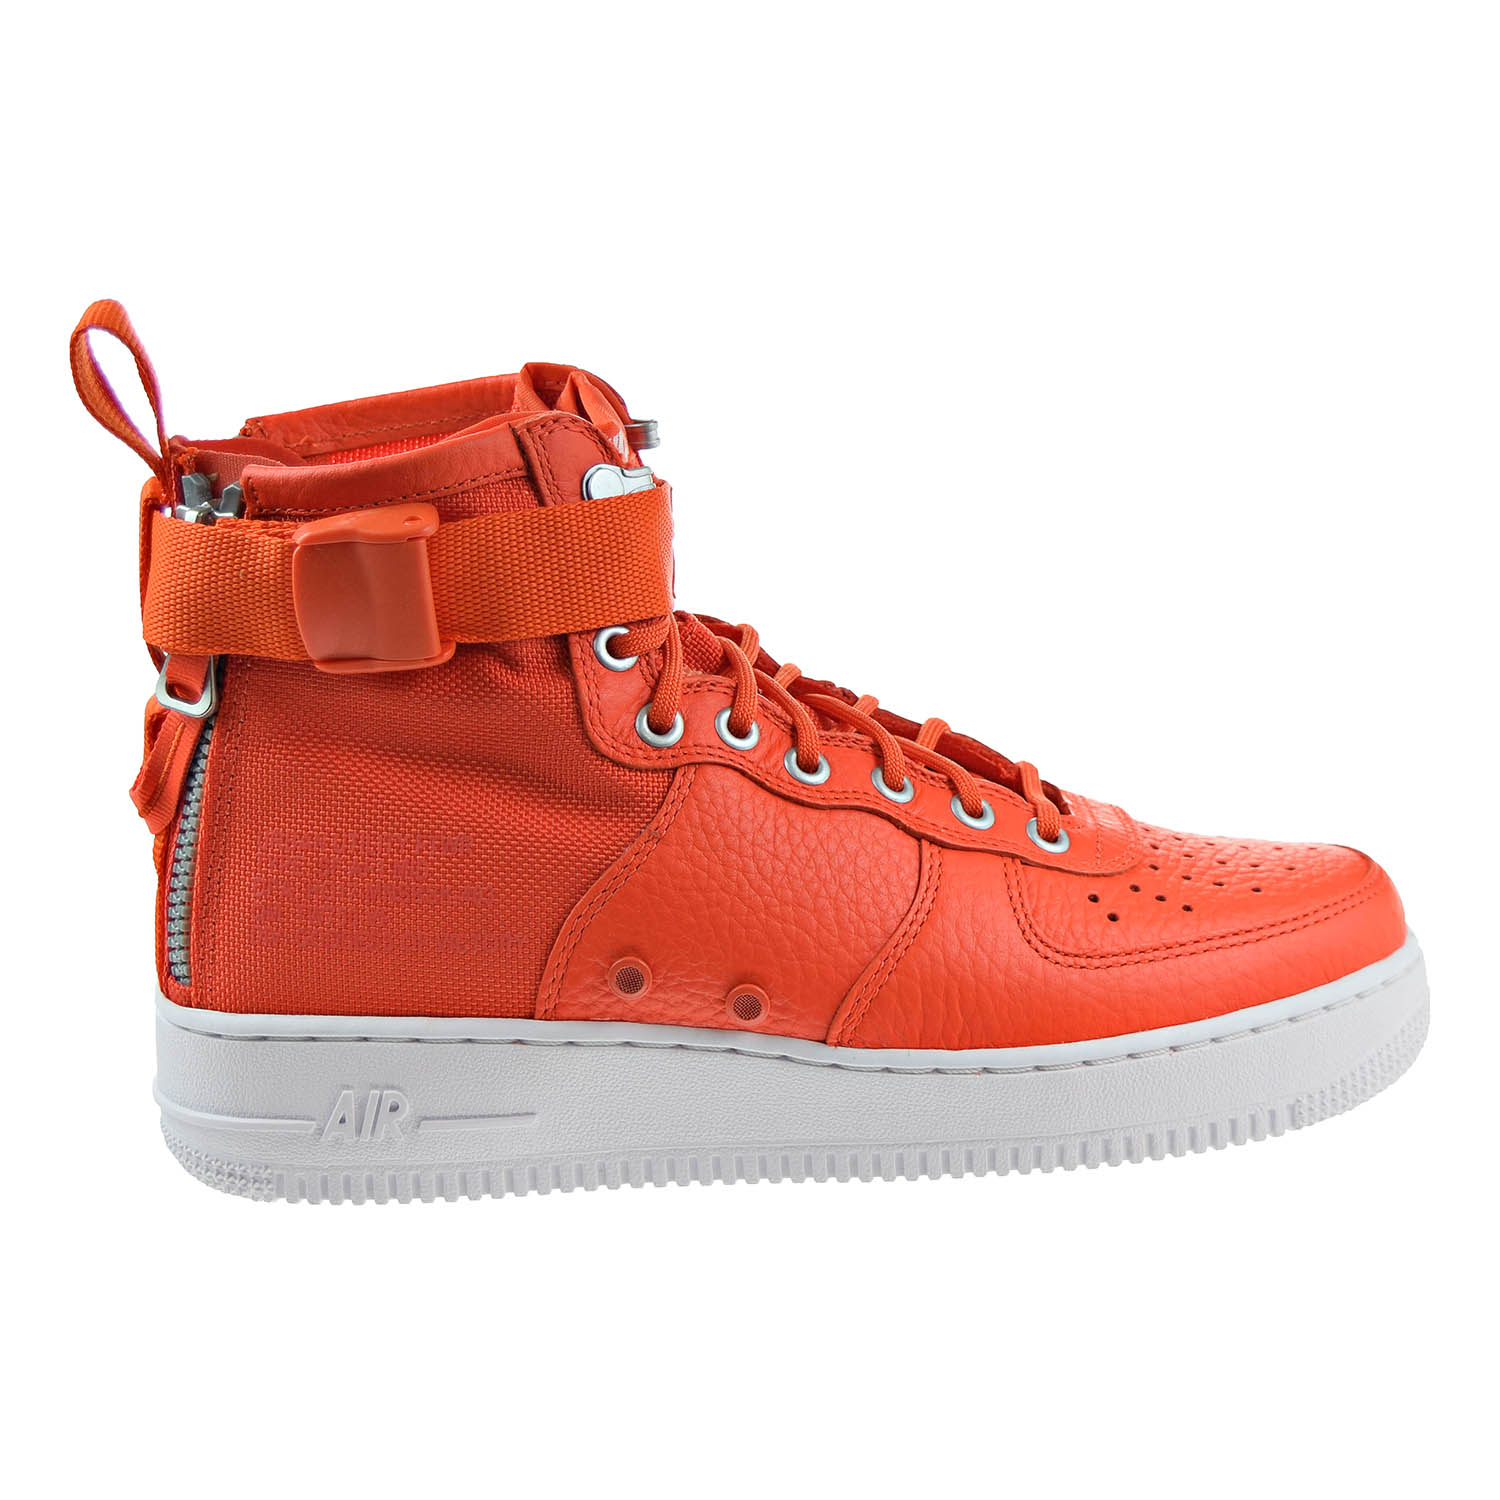 خليط بيتي كروكر رد فلفت Nike SF Air Force 1 MID Men's Basketball Shoes Team Orange 917753-800 | eBay خليط بيتي كروكر رد فلفت